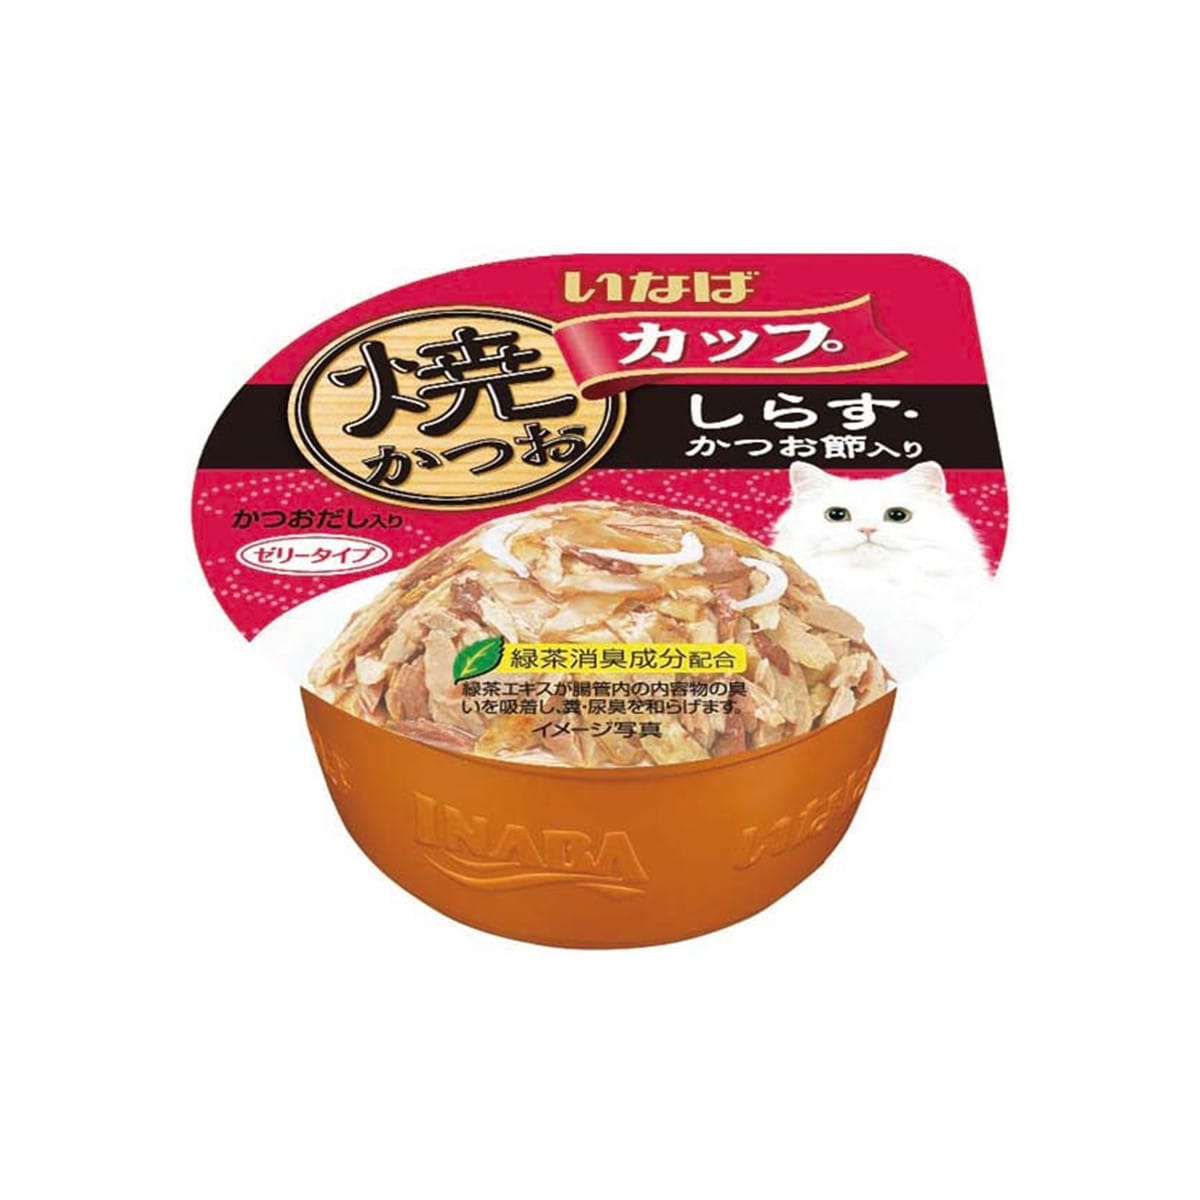 Inaba อินาบะ อาหารเปียก แบบถ้วย สำหรับแมว รสทูน่าเนื้อขาวแดงปลาข้าวสารปลาโอ 80 g_1